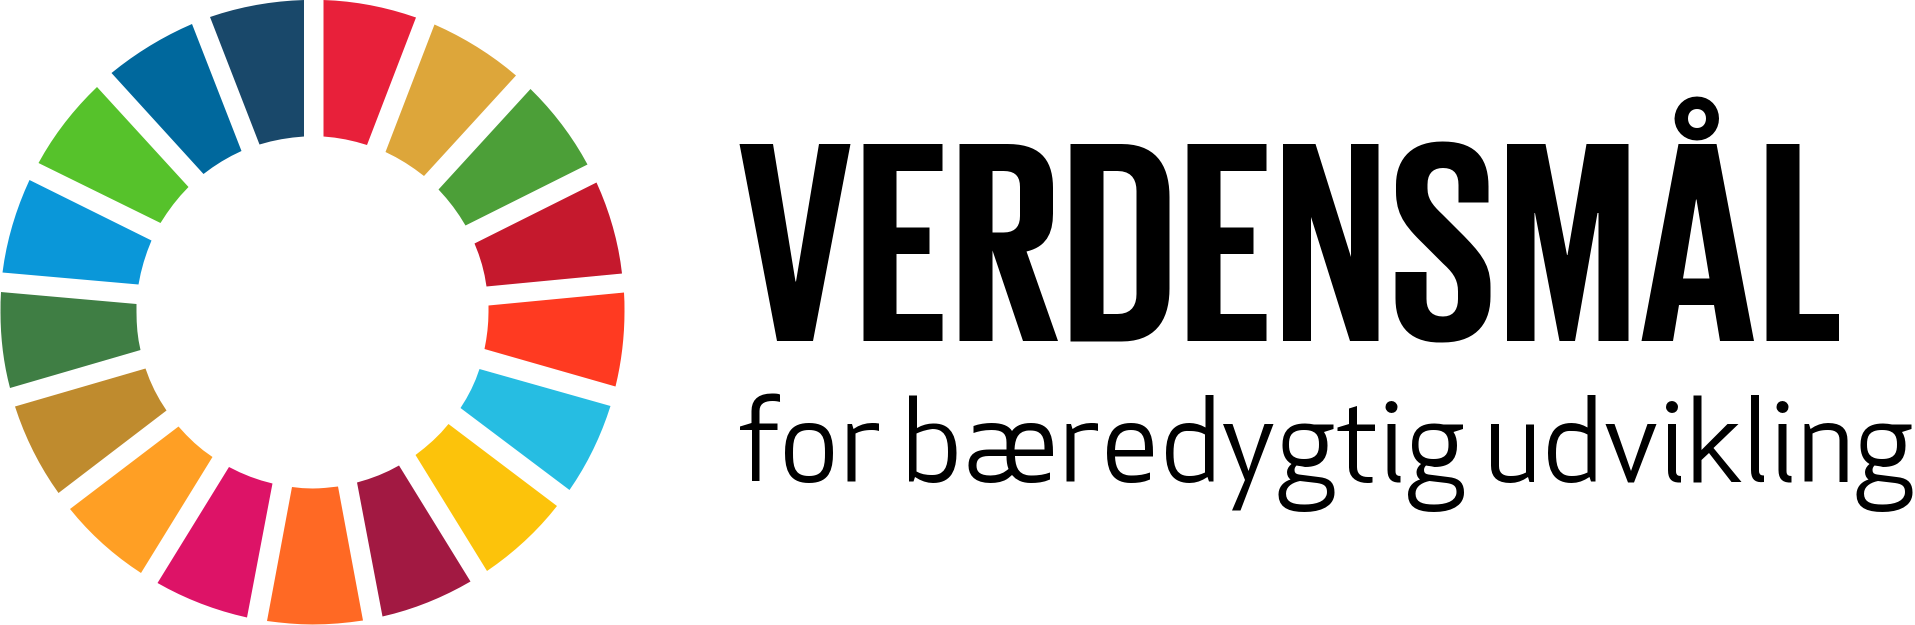 Verdensmål logo